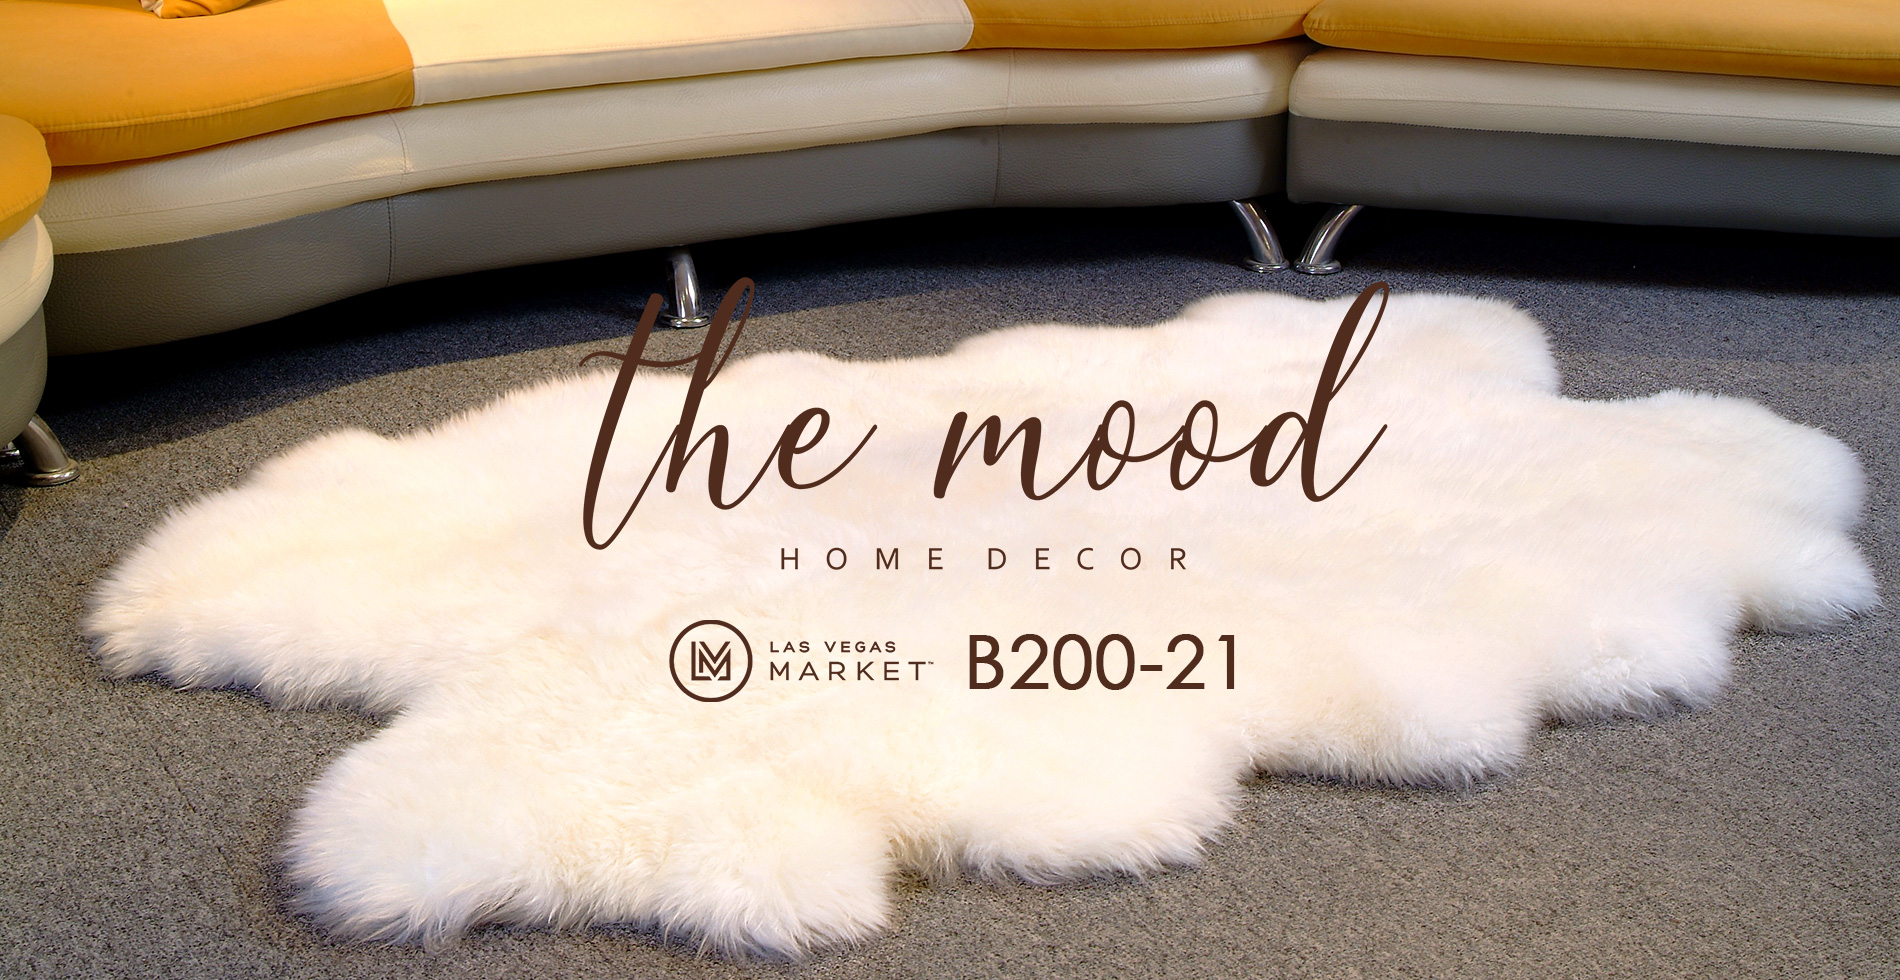 The Mood featured sheepskin rugs at B200-21 Las Vegas Market 2018